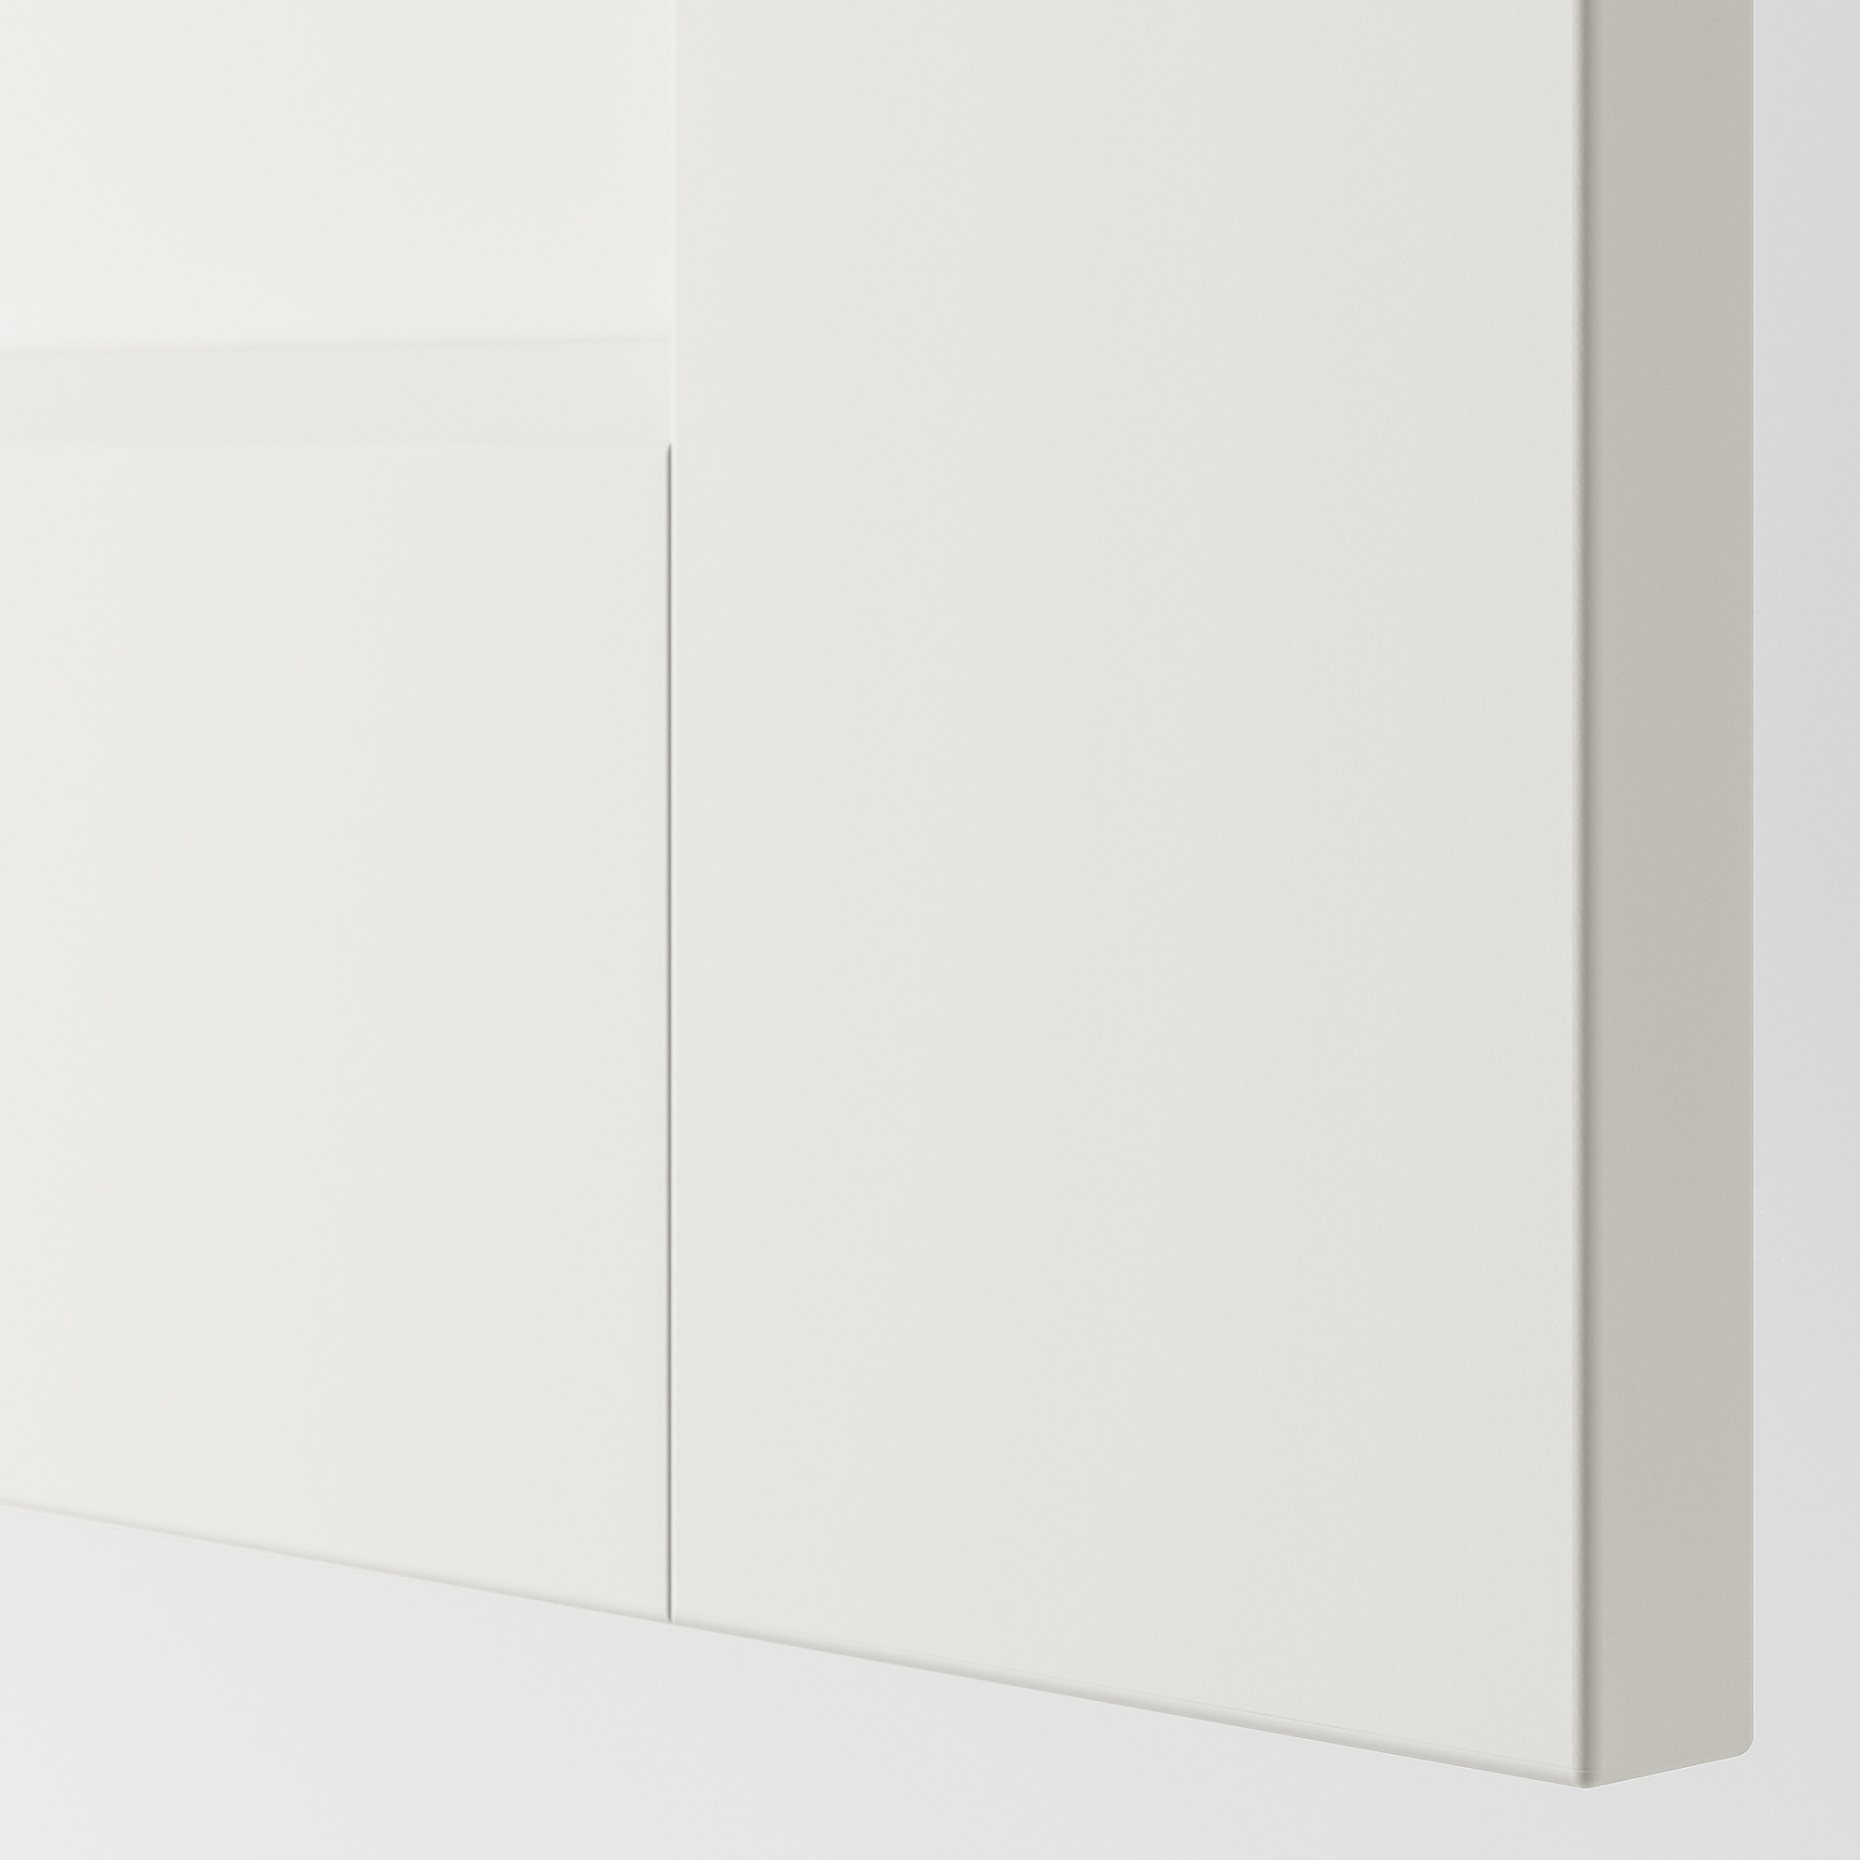 GRIMO, πόρτα με μεντεσέδες, 50x229 cm, 591.835.83